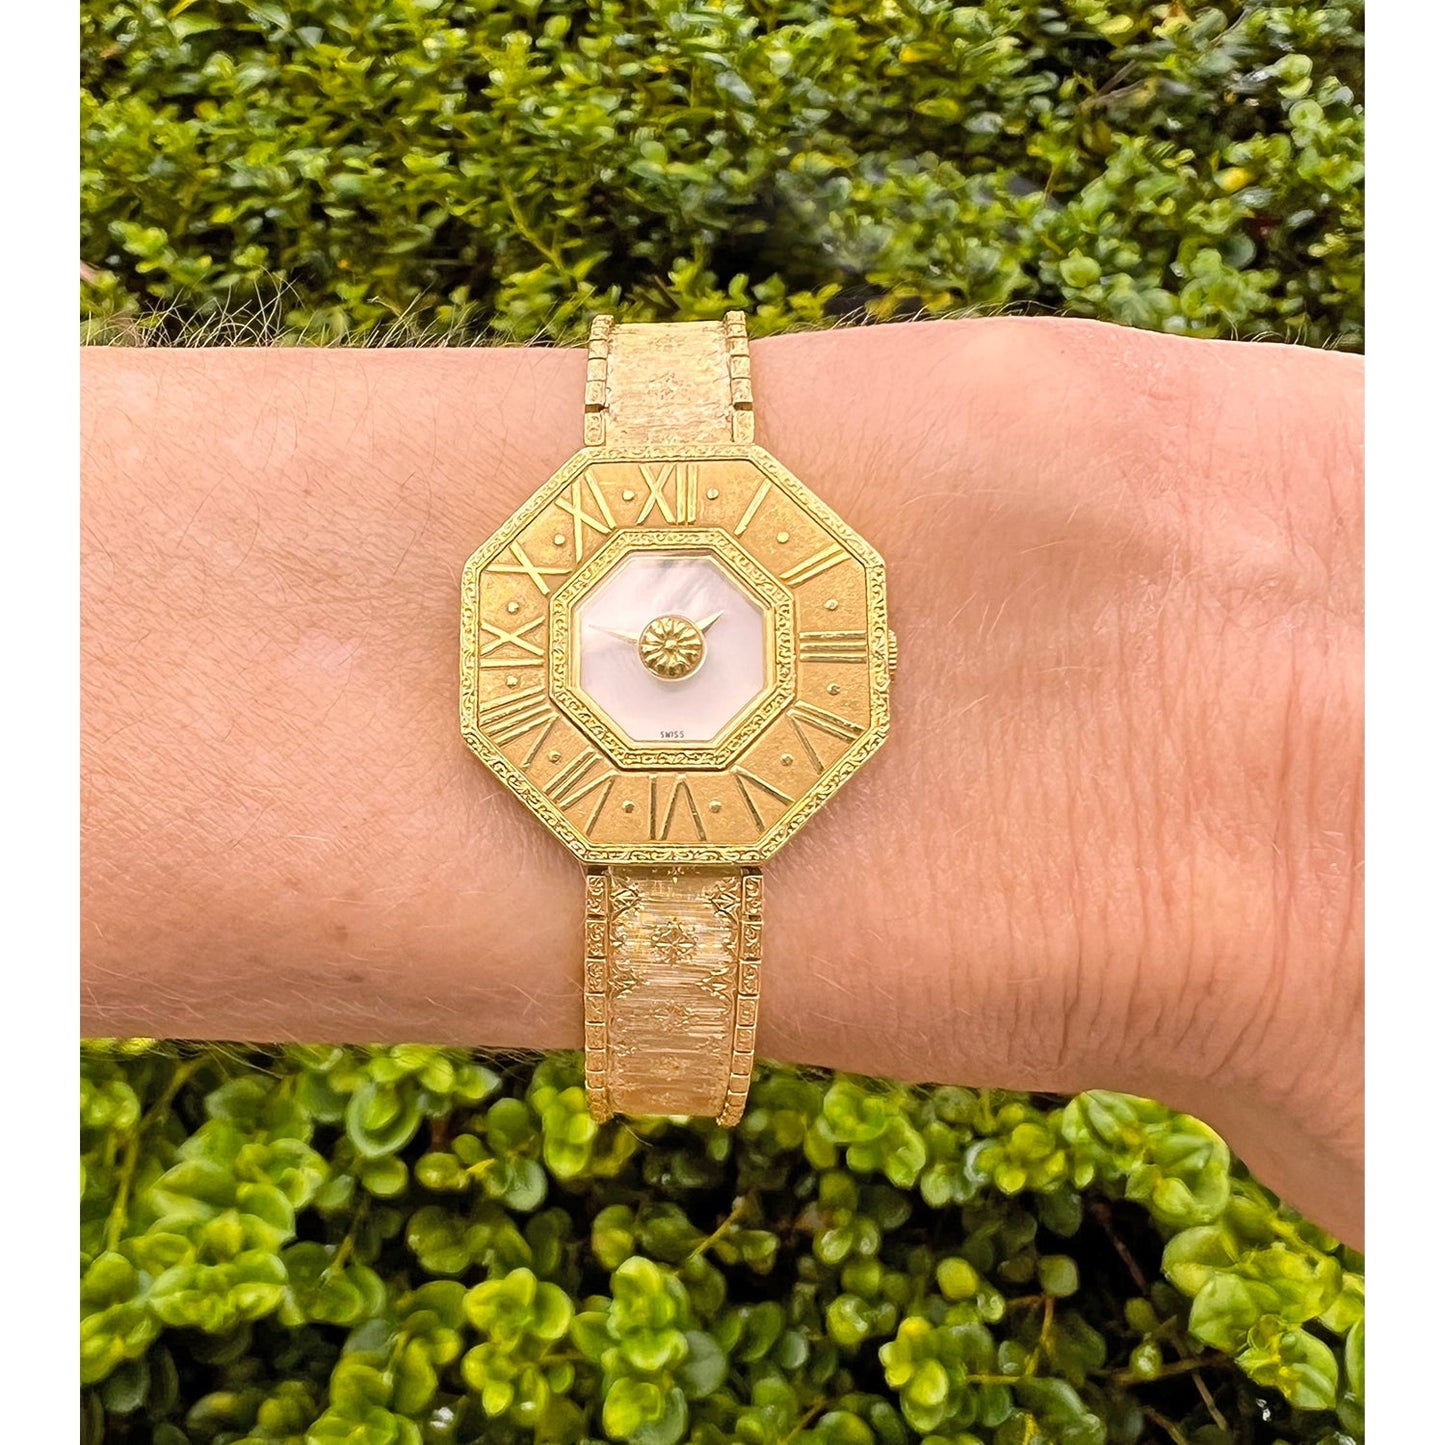 Buccellati - Estate 18k Yellow Gold Oktachron Bracelet Watch